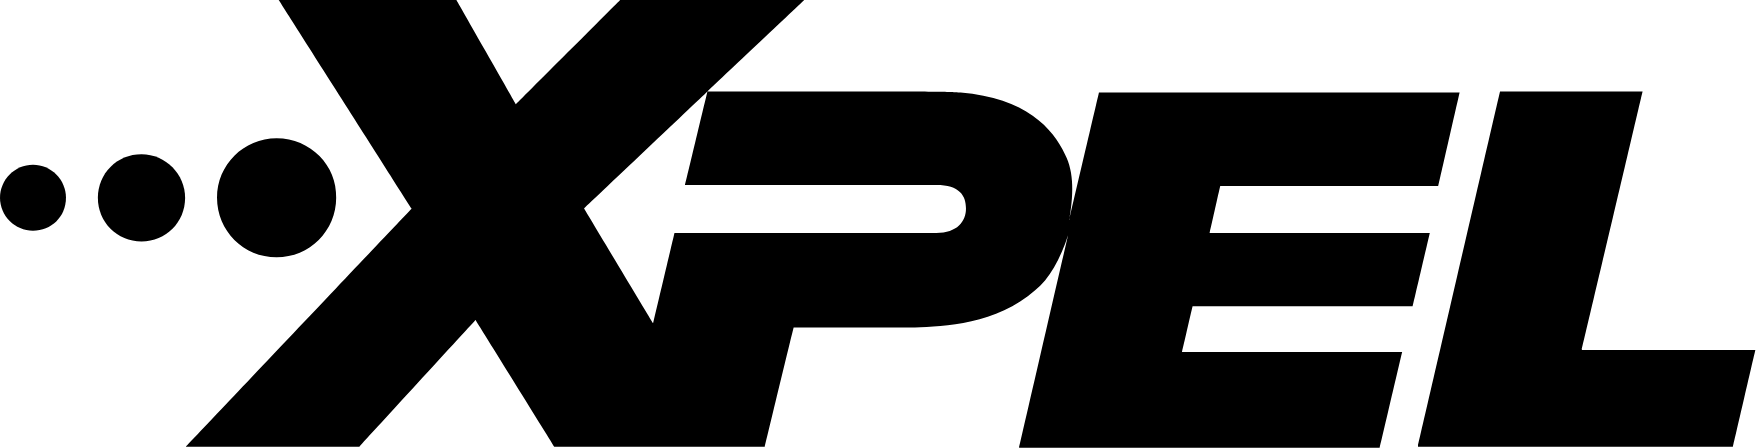 window tint service logo